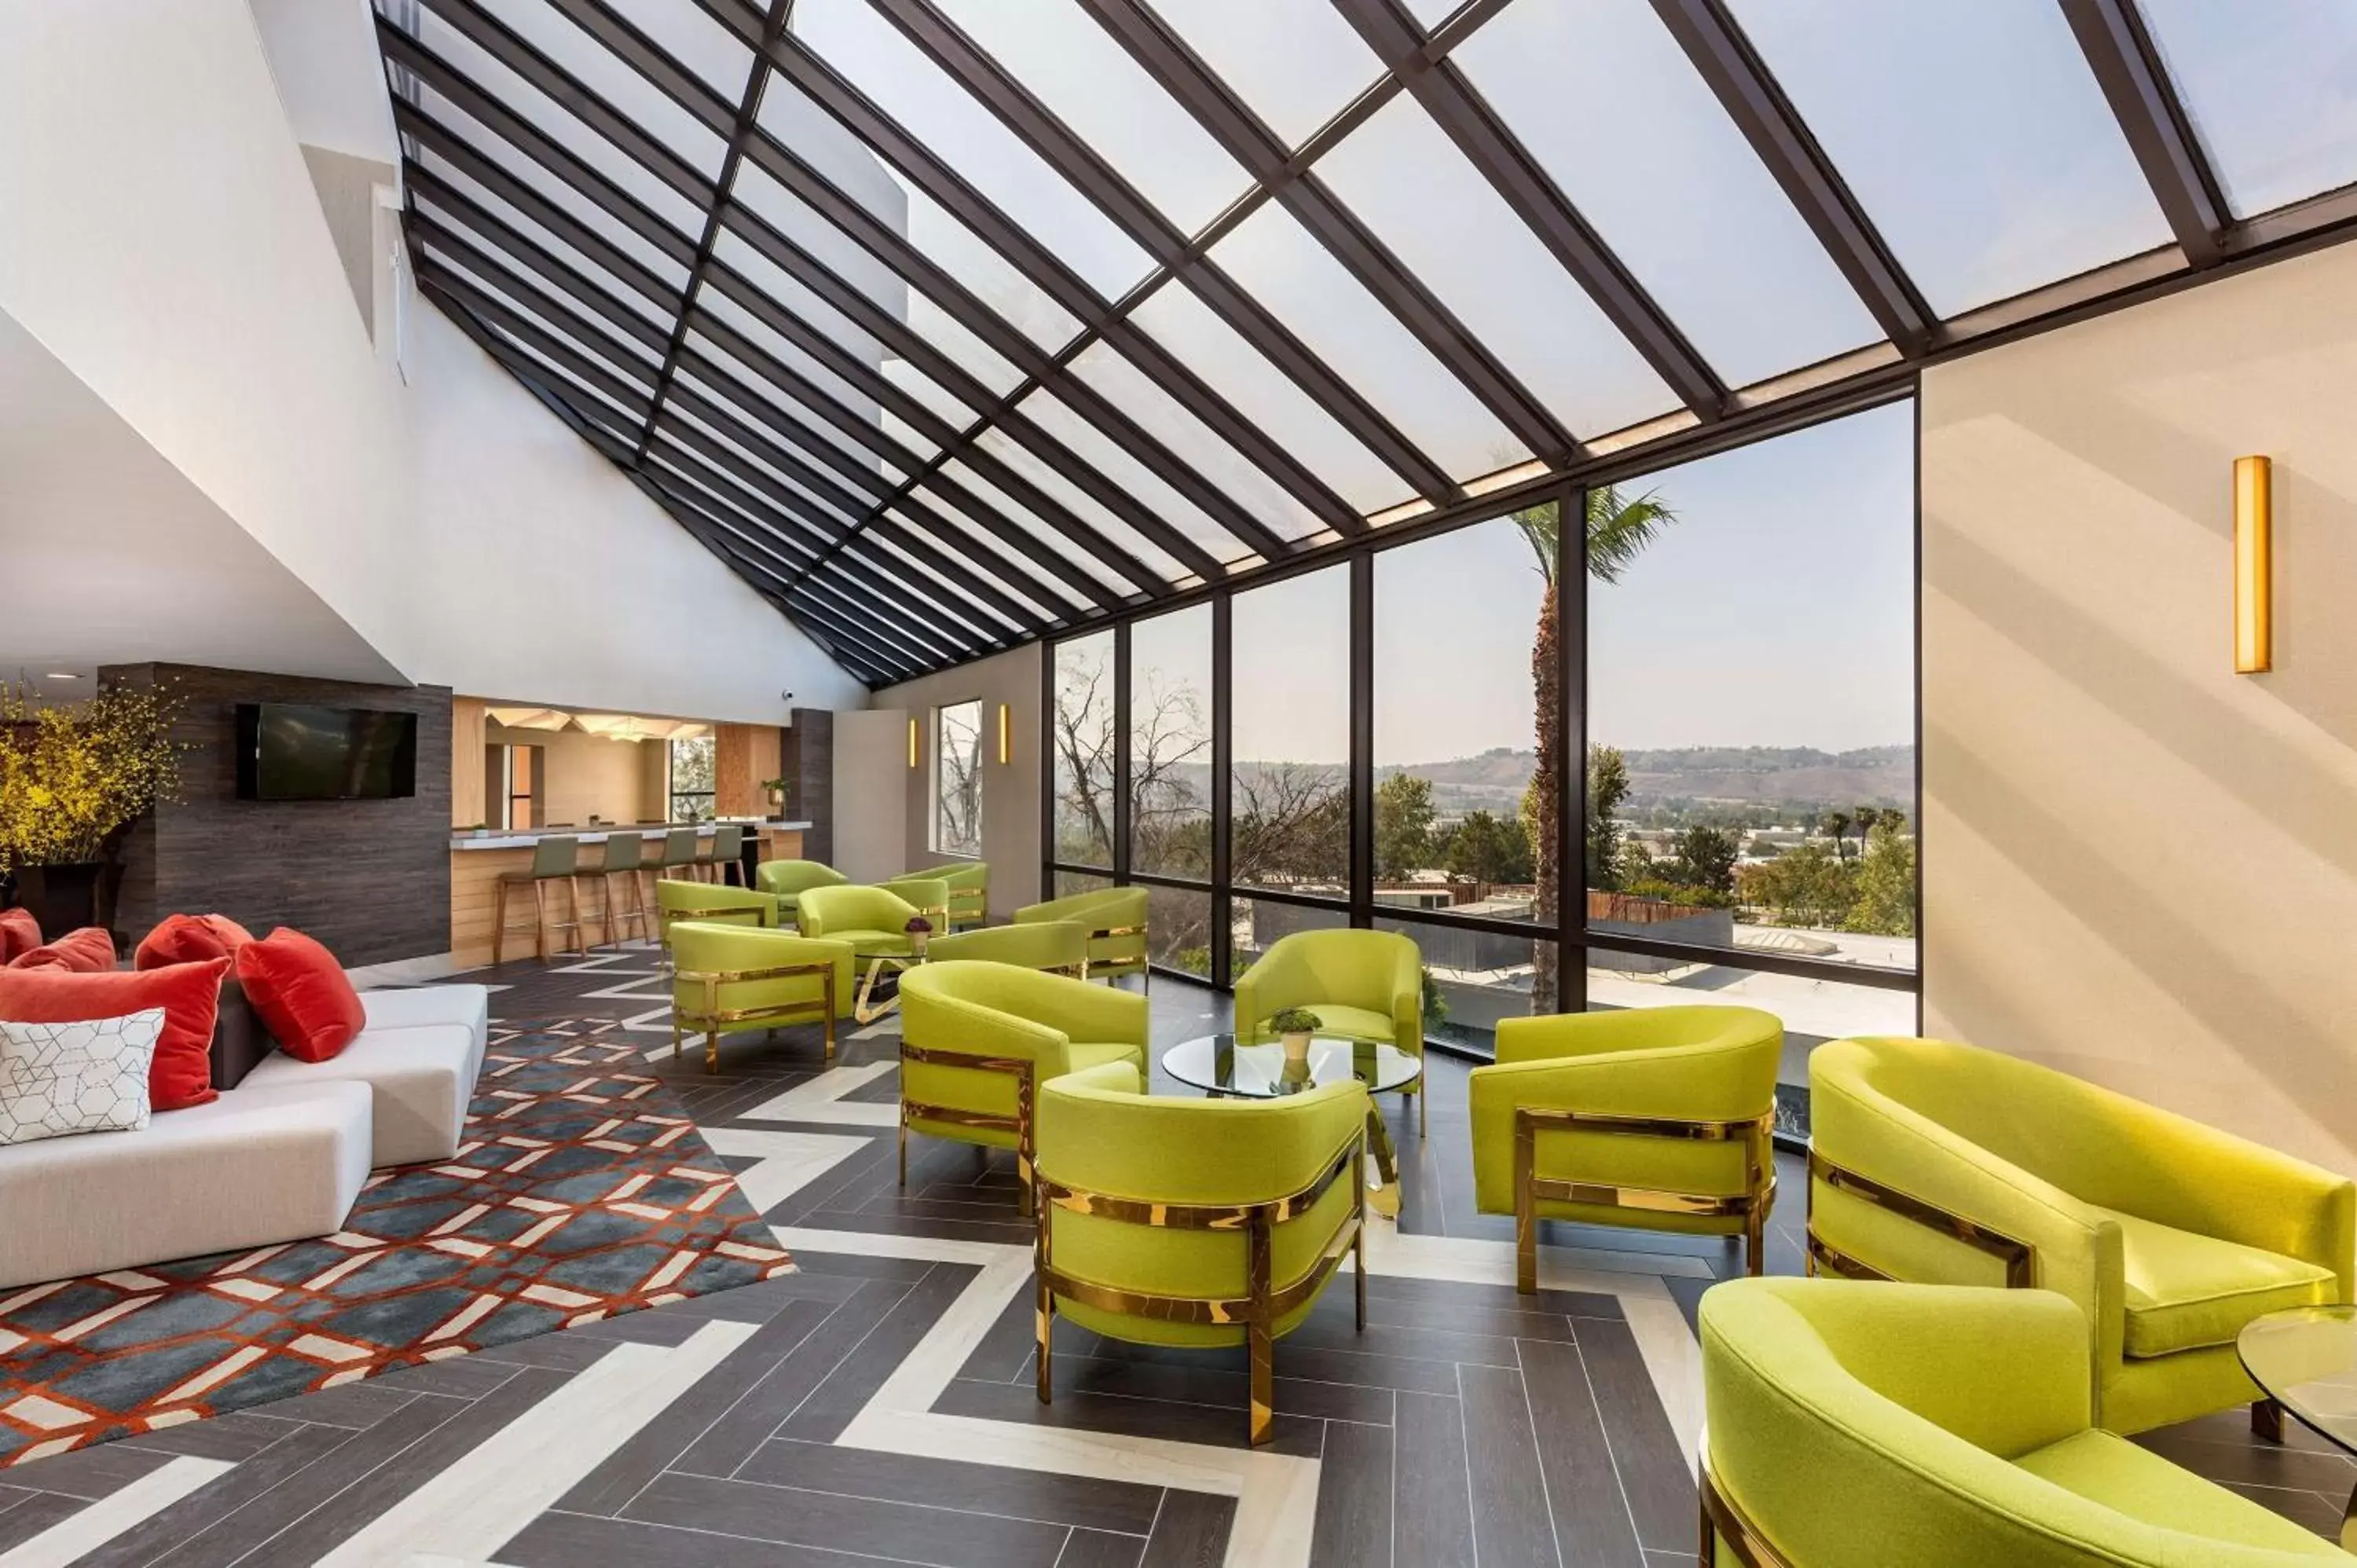 Lobby or reception in Doubletree By Hilton Pomona